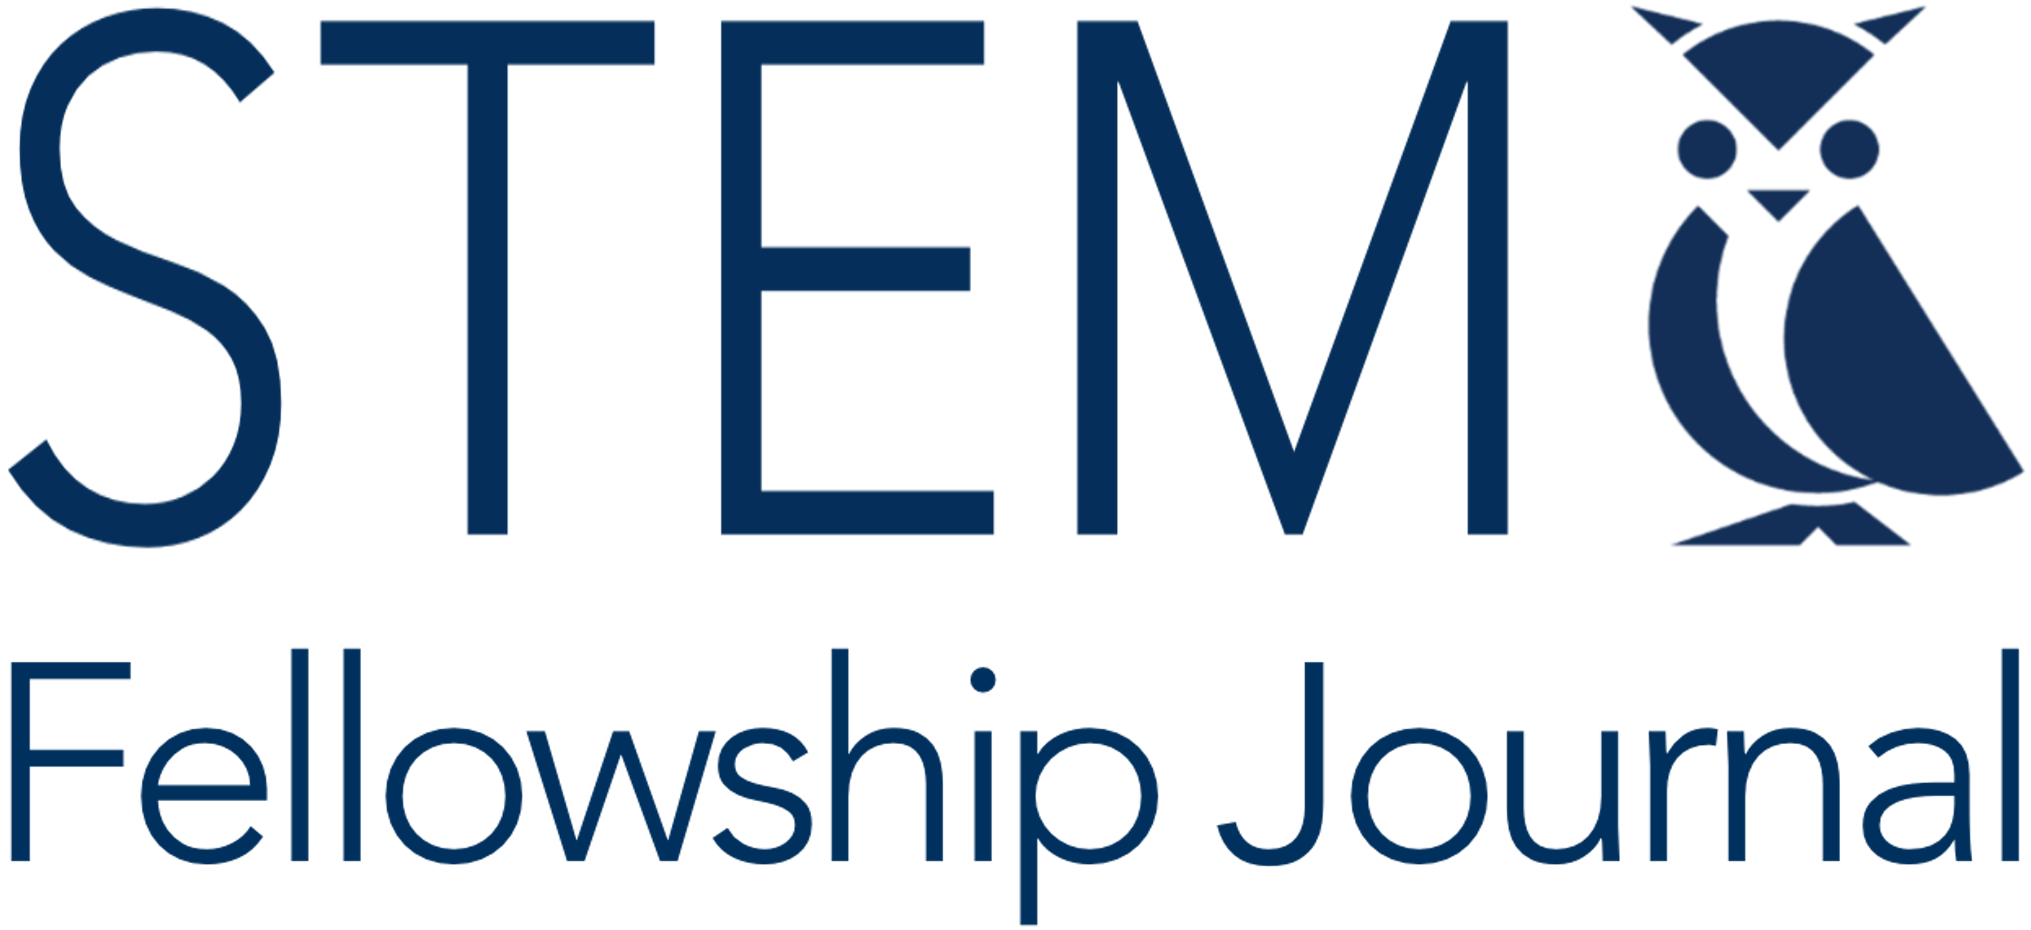 STEM Fellowship Journal logo